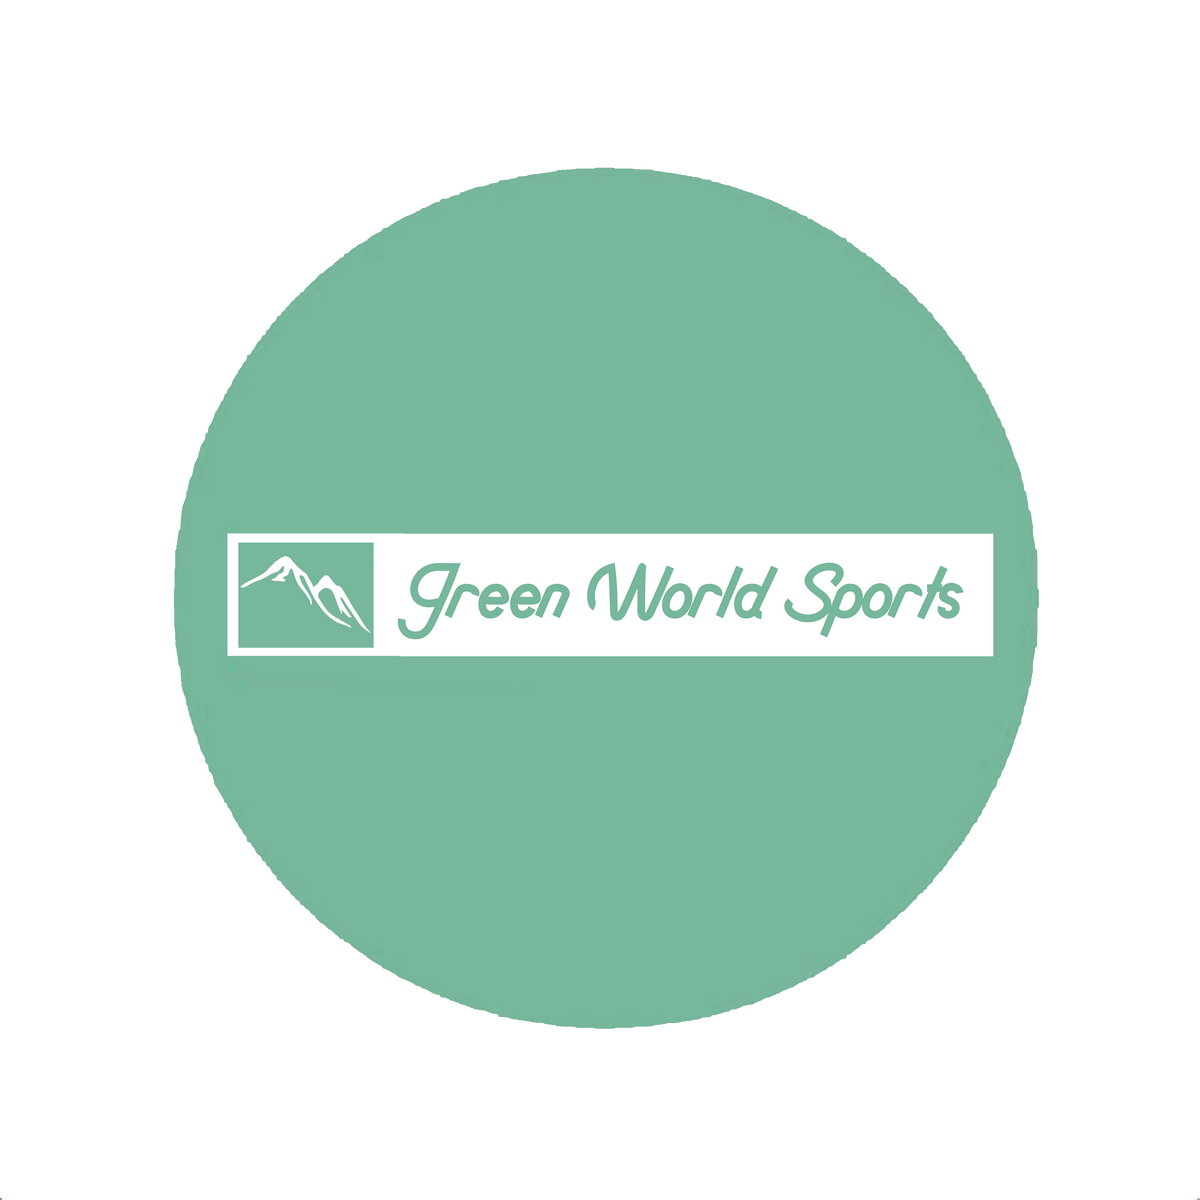 Green World Sports